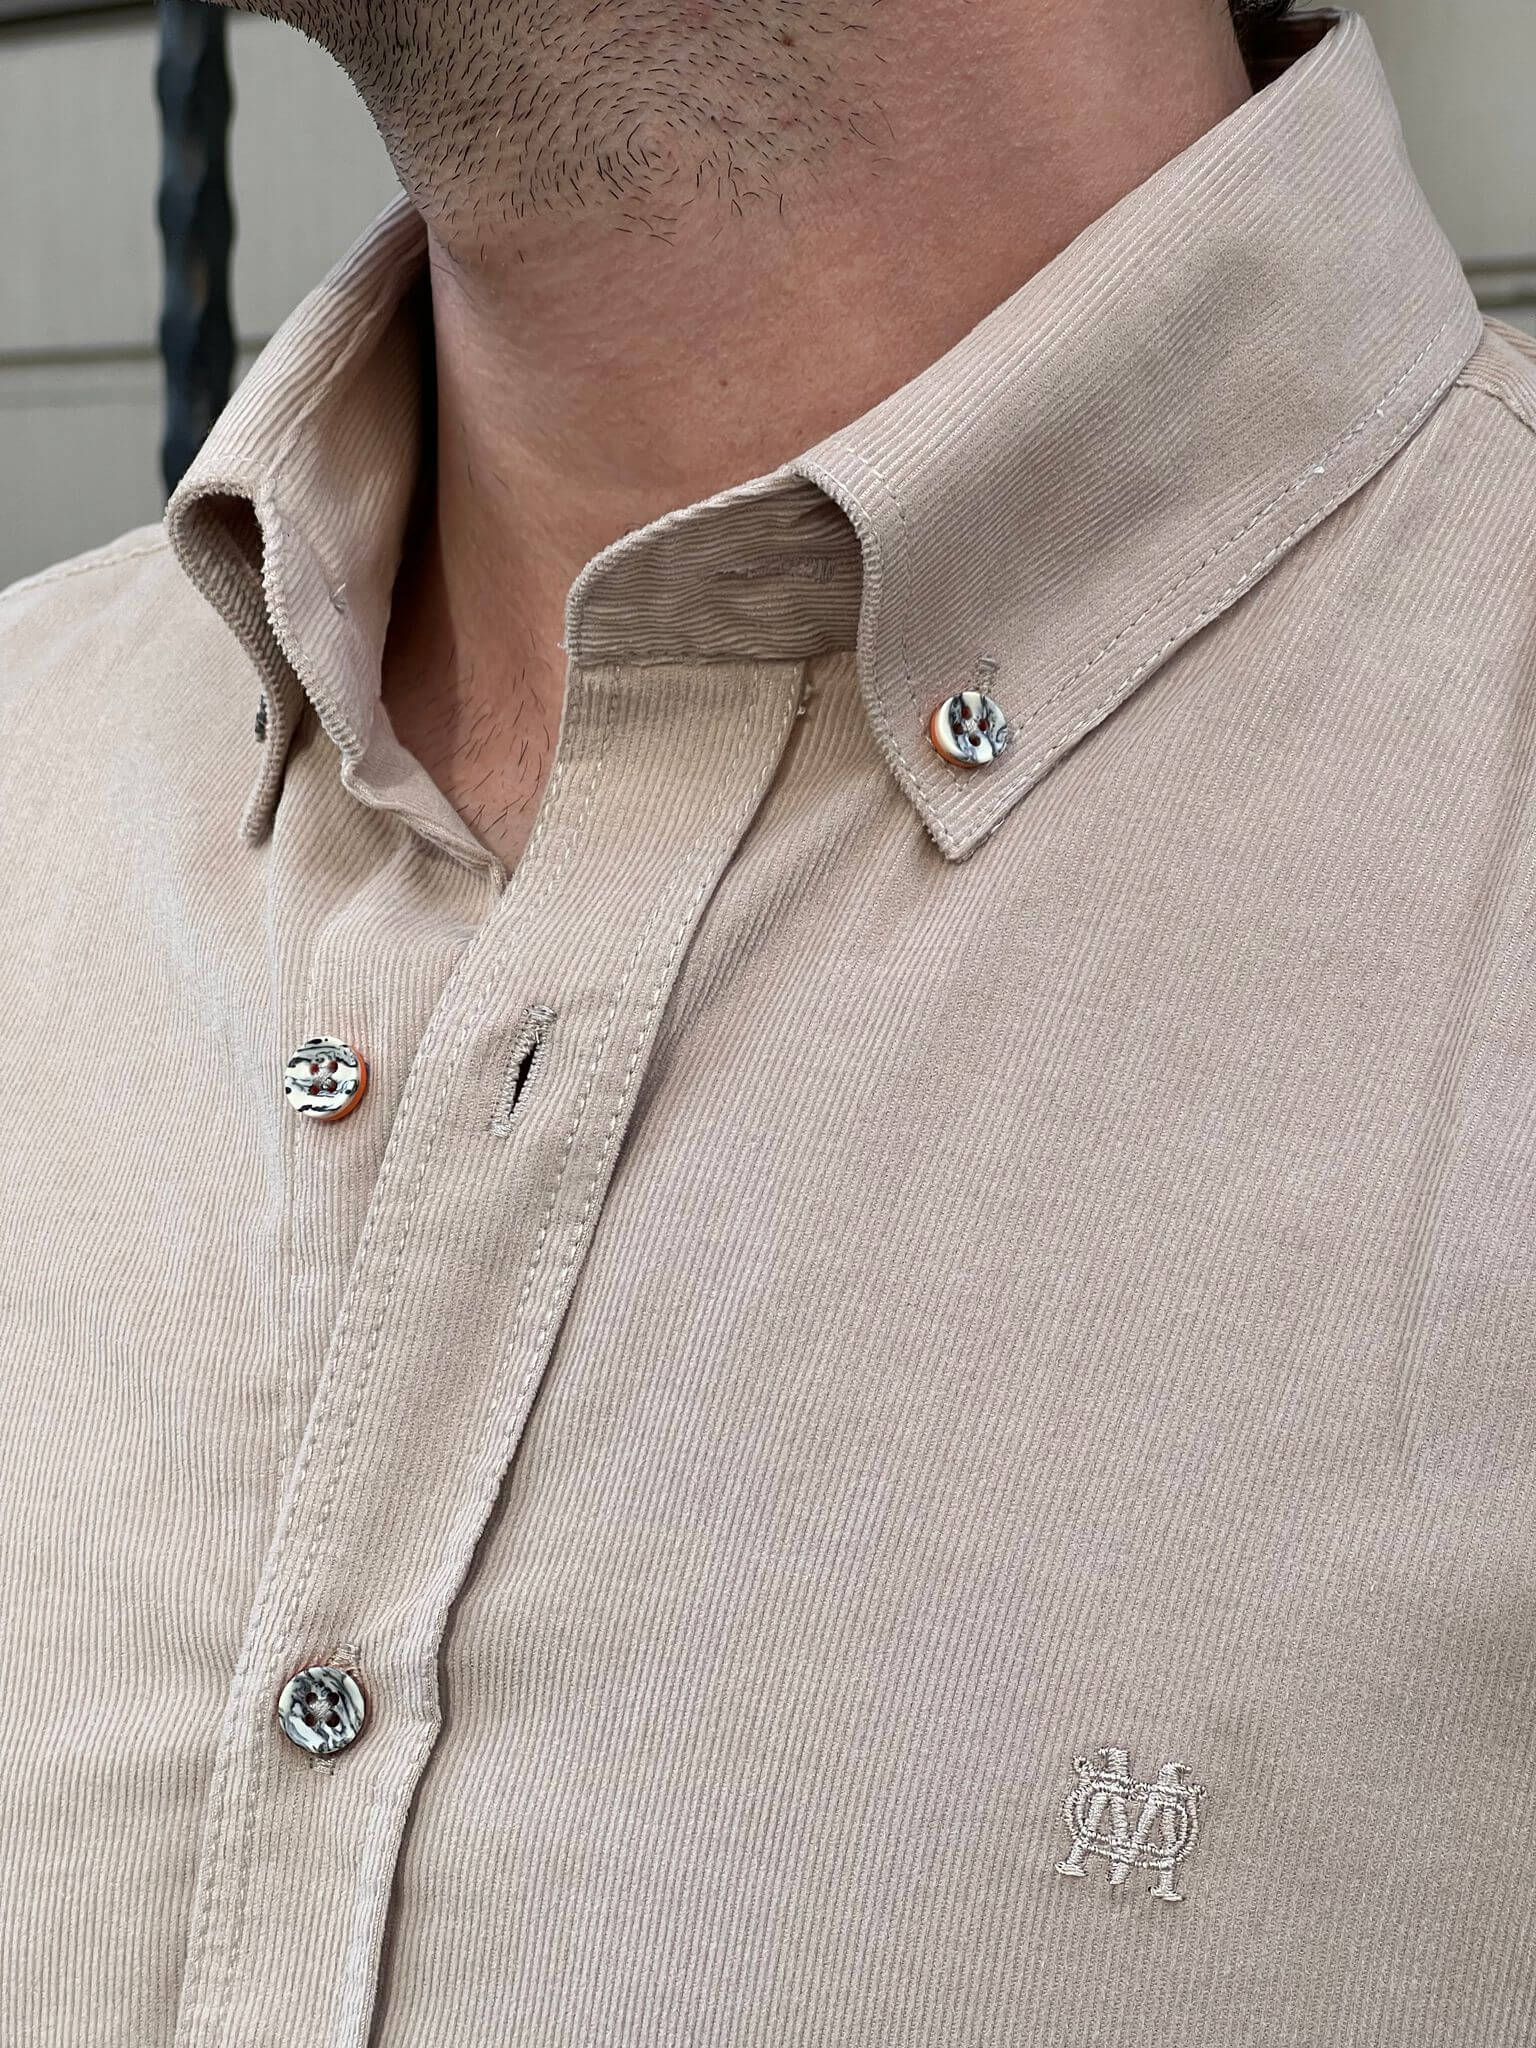 Our male model effortlessly flaunts the Velvet Beige Shirt, epitomizing refined style.